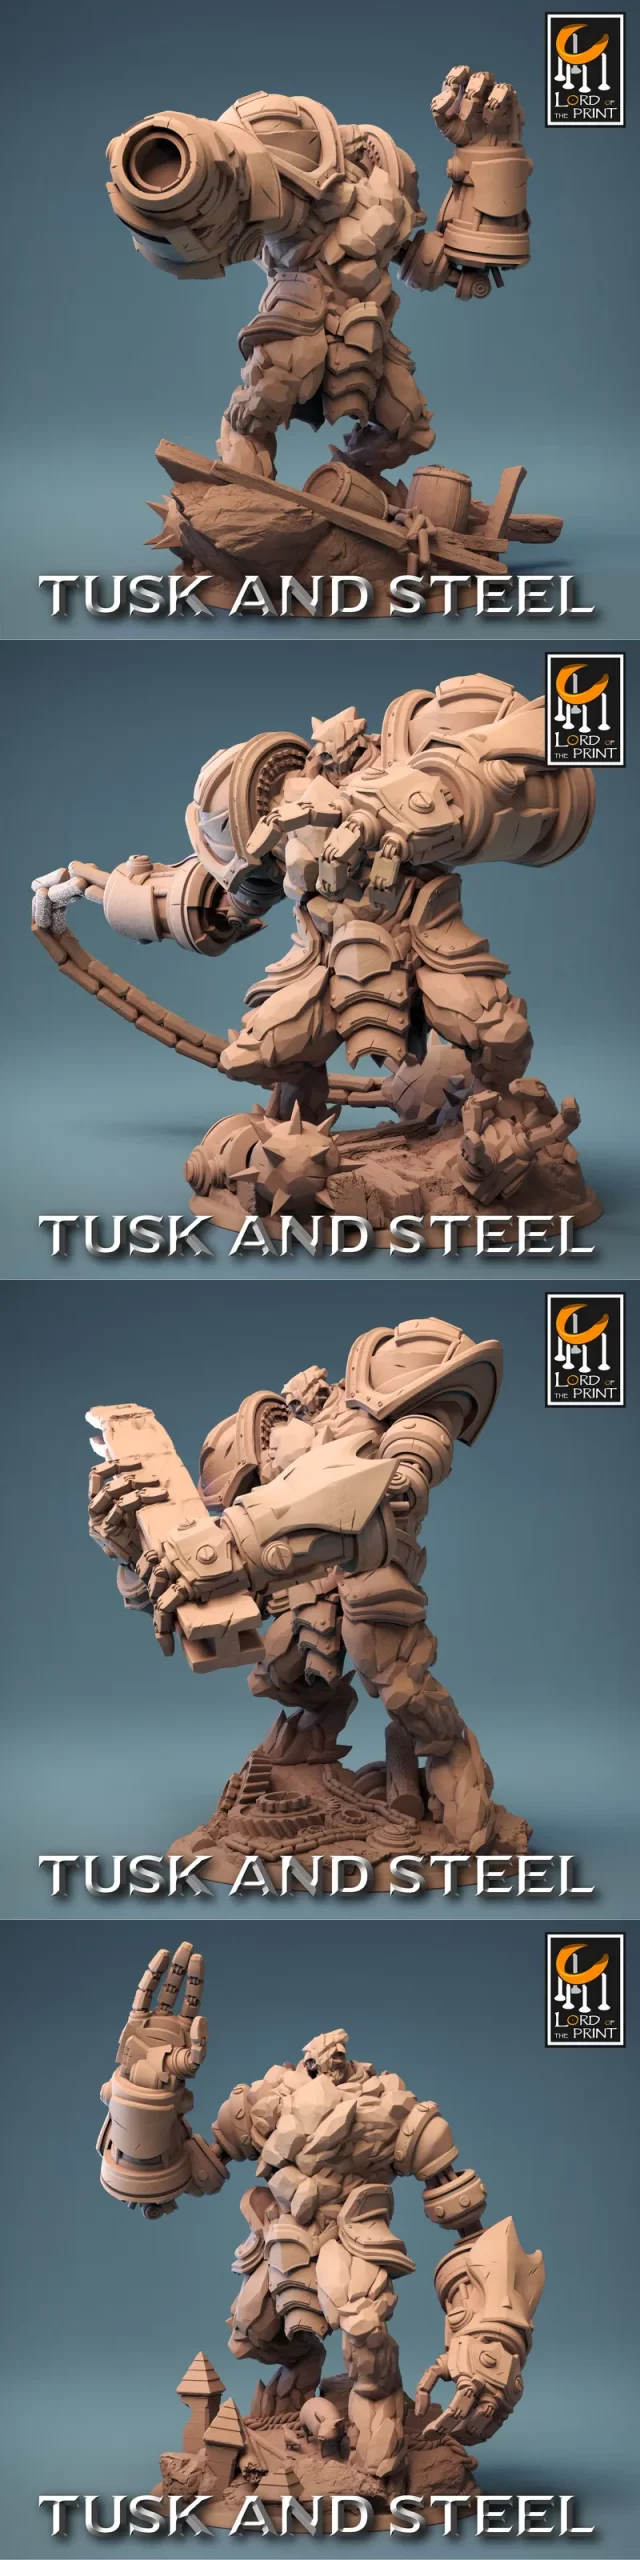 Lord of the Print - Tusk and Steel - Ferrumrocks